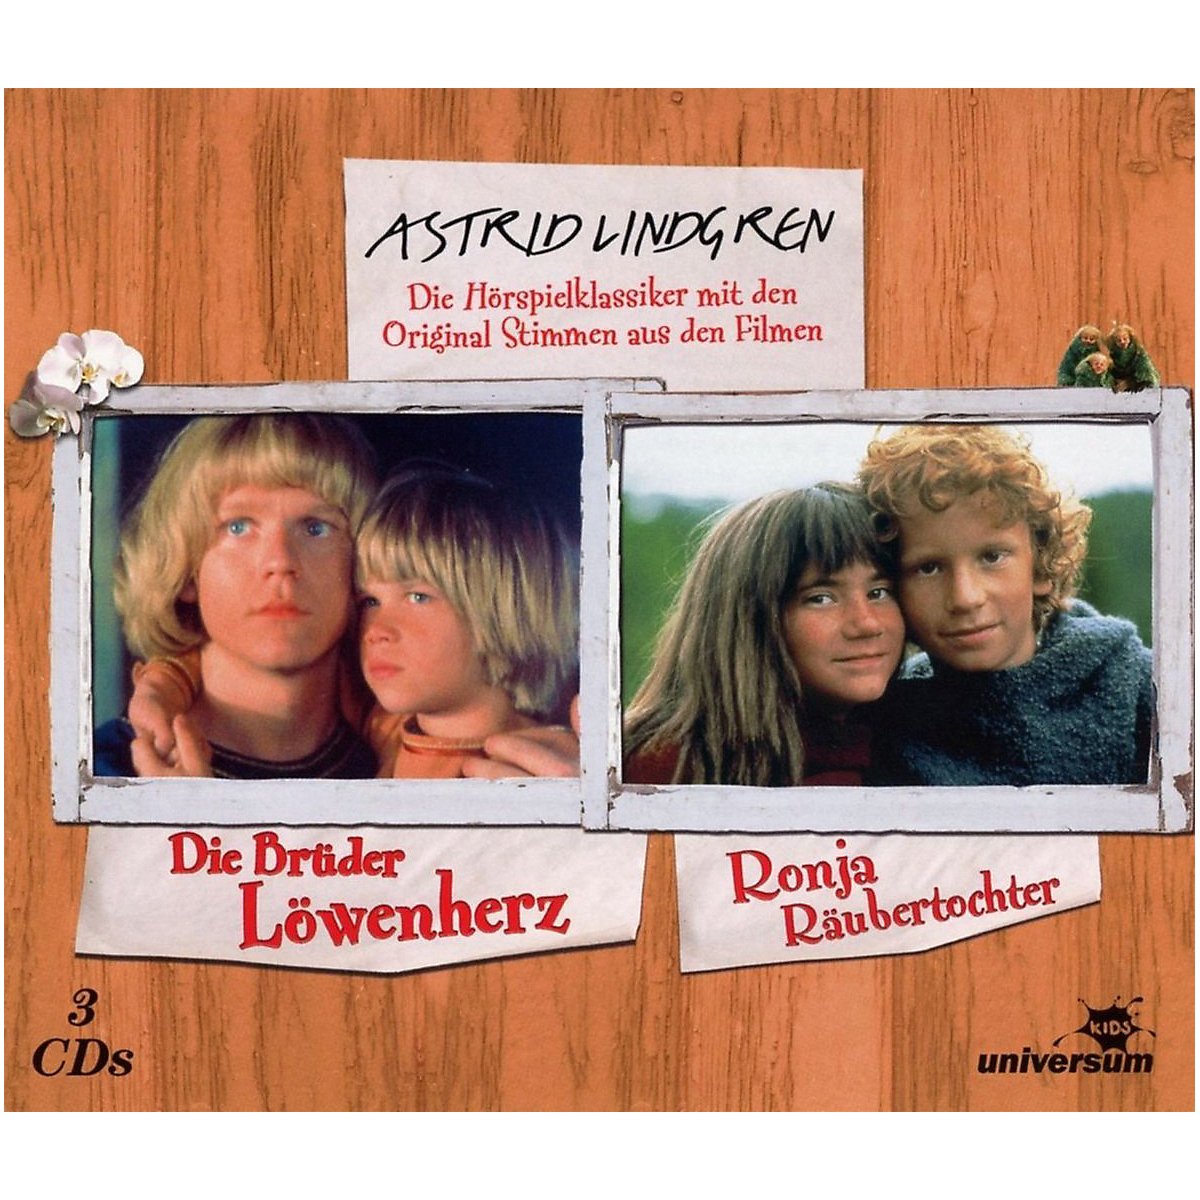 universum CD Astrid Lindgren Hörspielbox 1